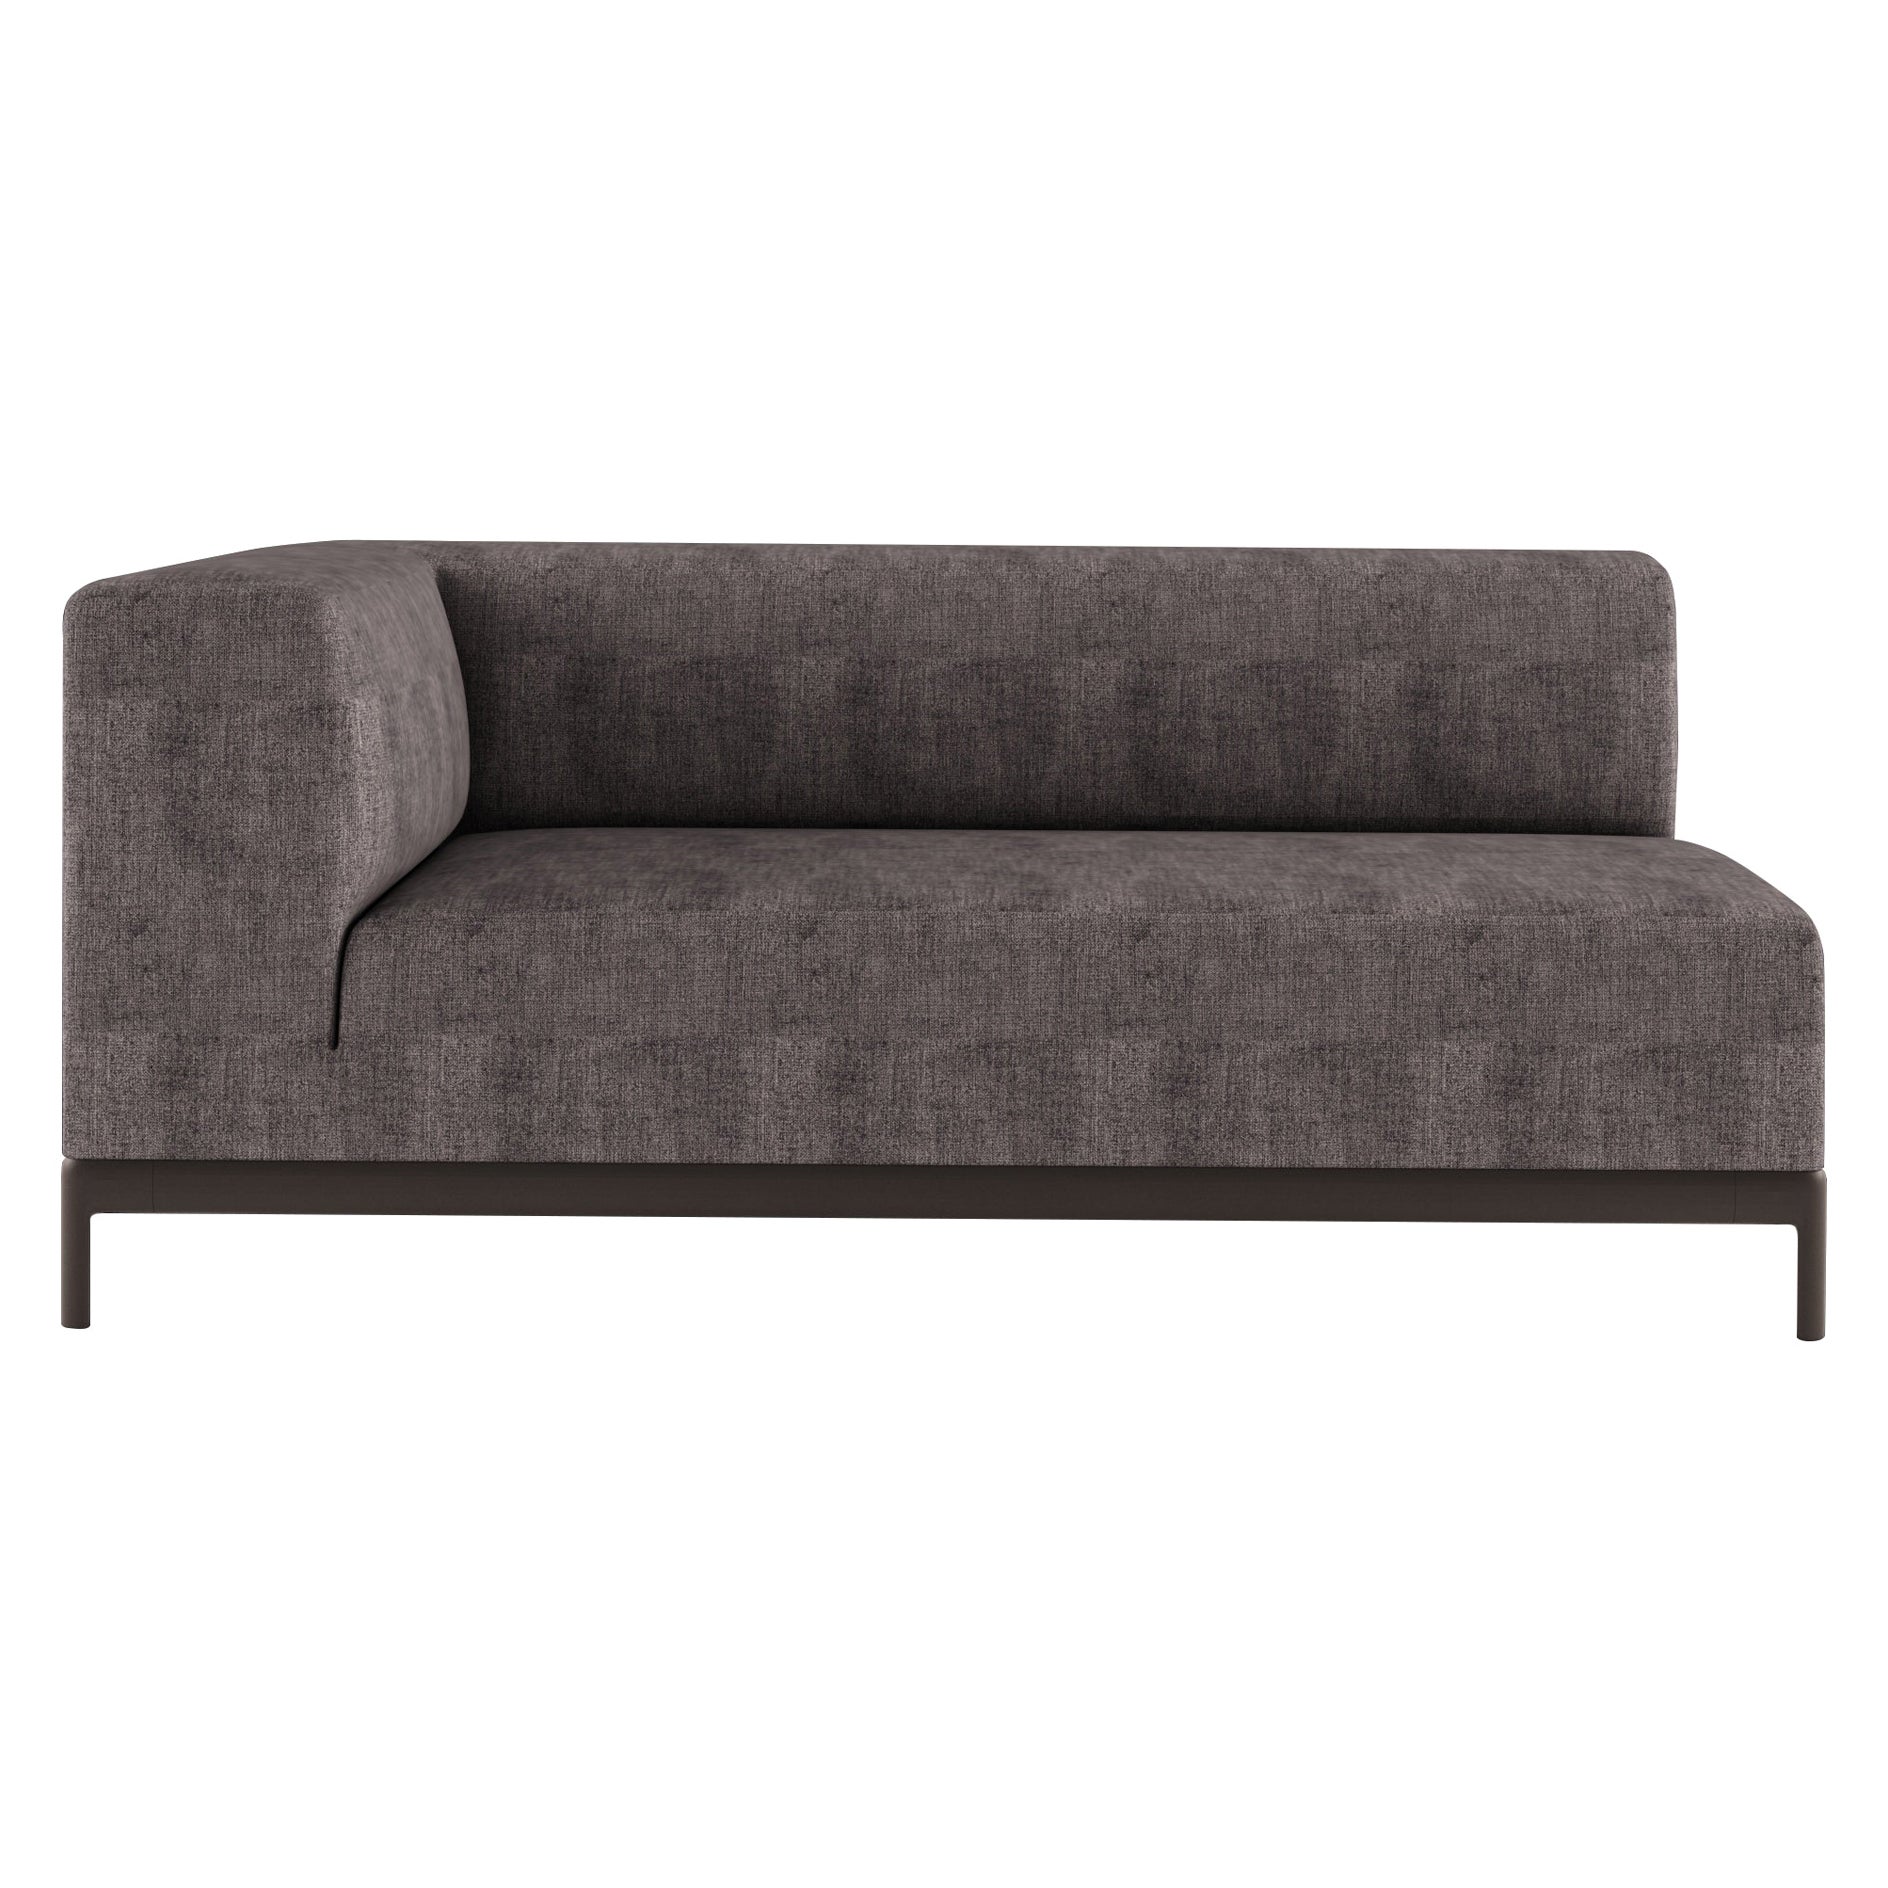 Alias P37 AluZen Soft Angular Sofa with Upholstery & Lacquered Aluminum Frame For Sale